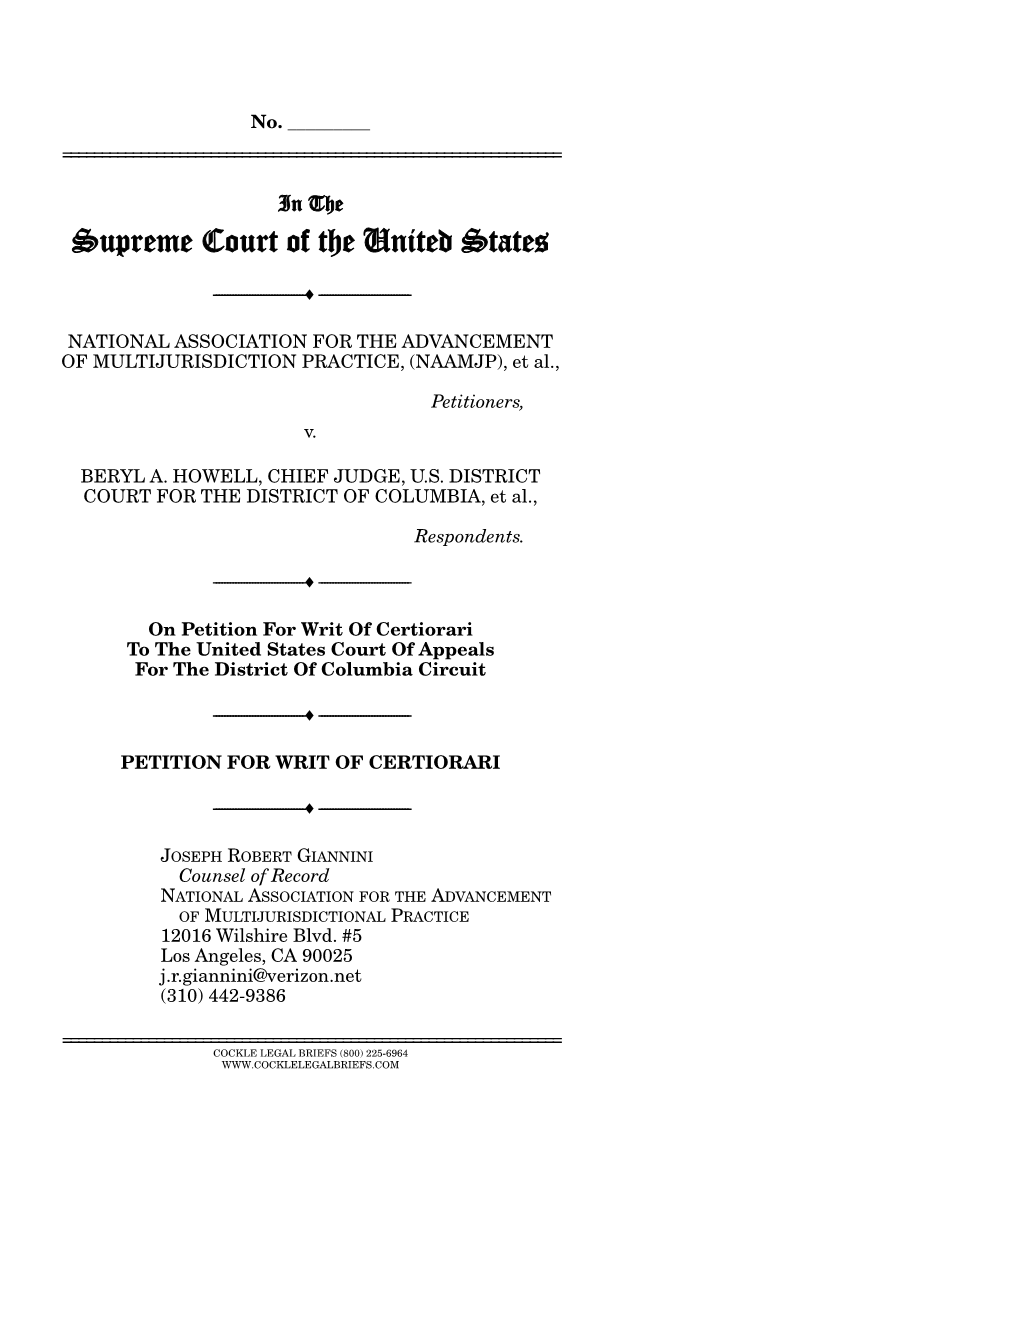 Naamjp Files Petition for Certiorari Asking the U.S. Supreme Court To